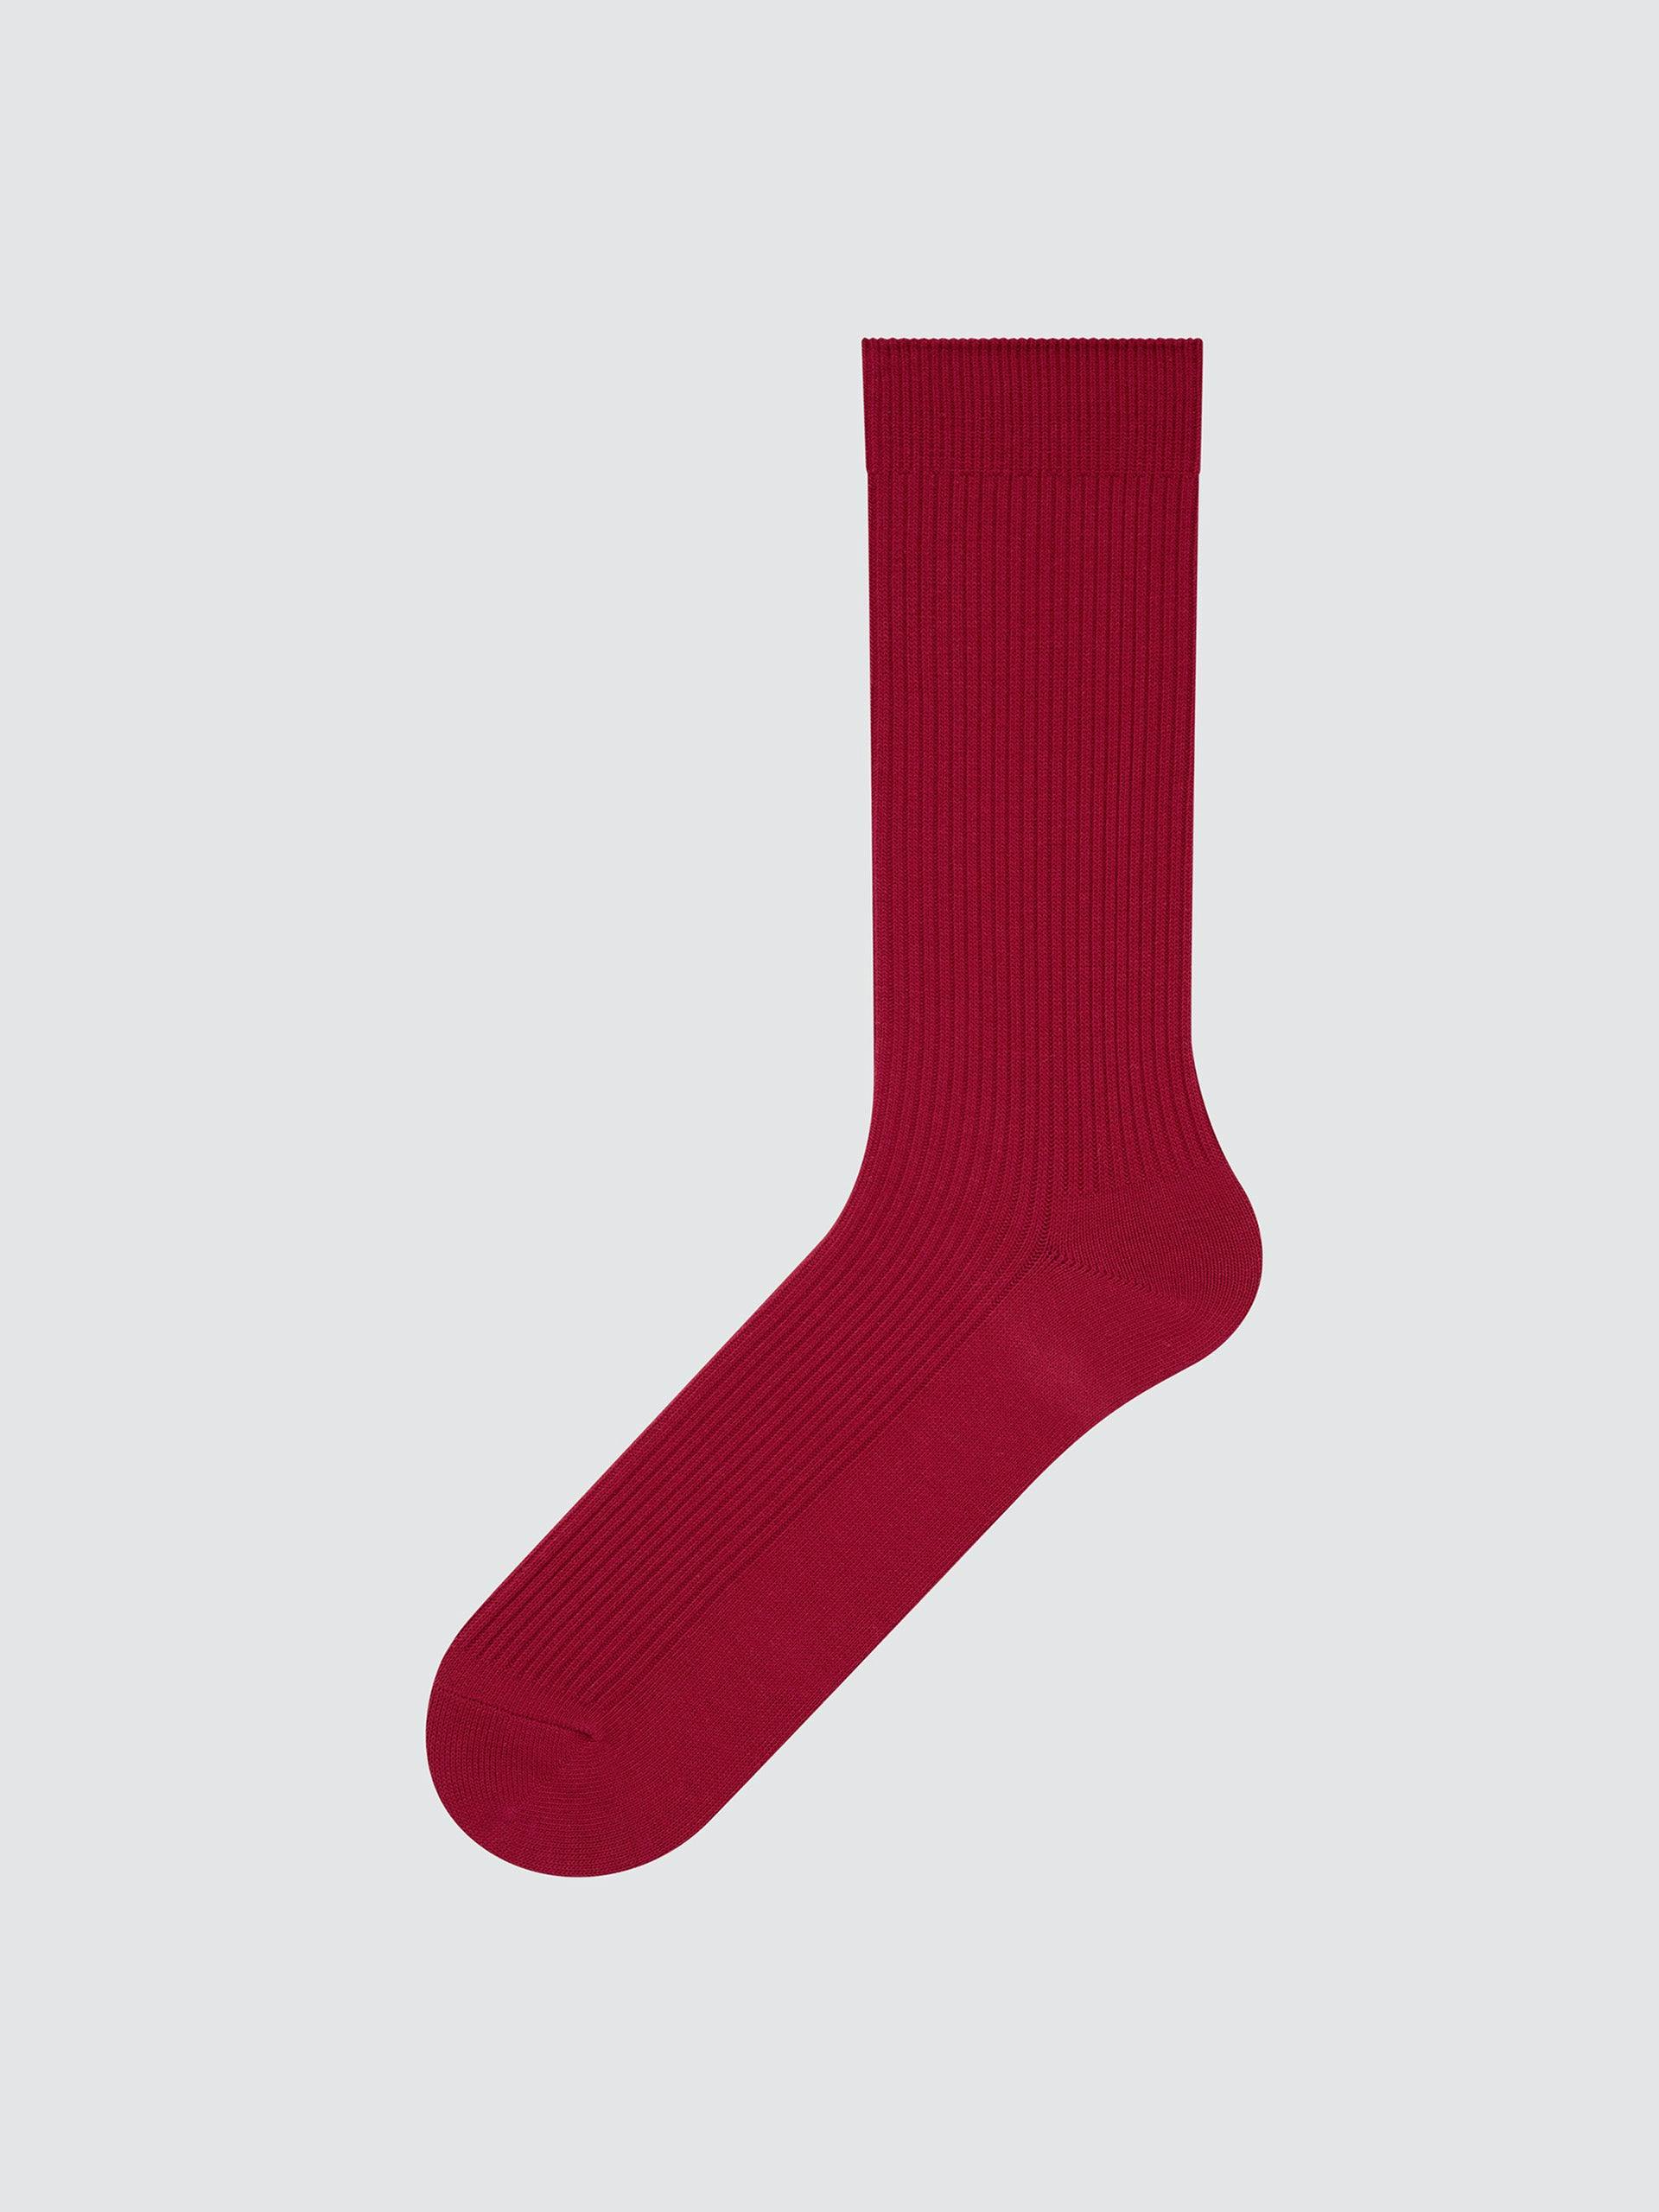 Colour socks in red